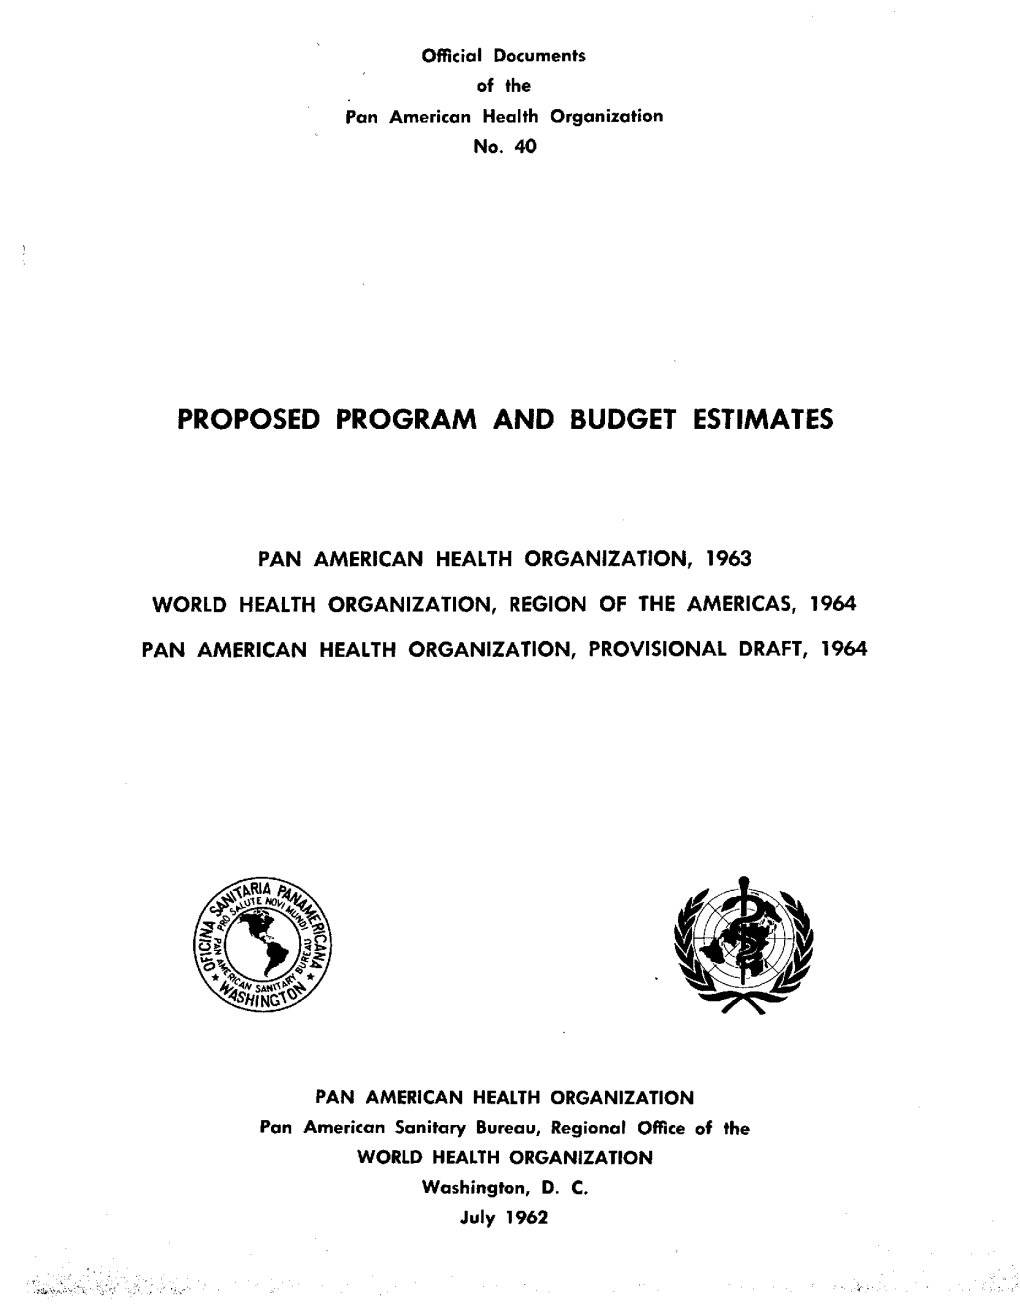 Proposed Program and Budget Estimates